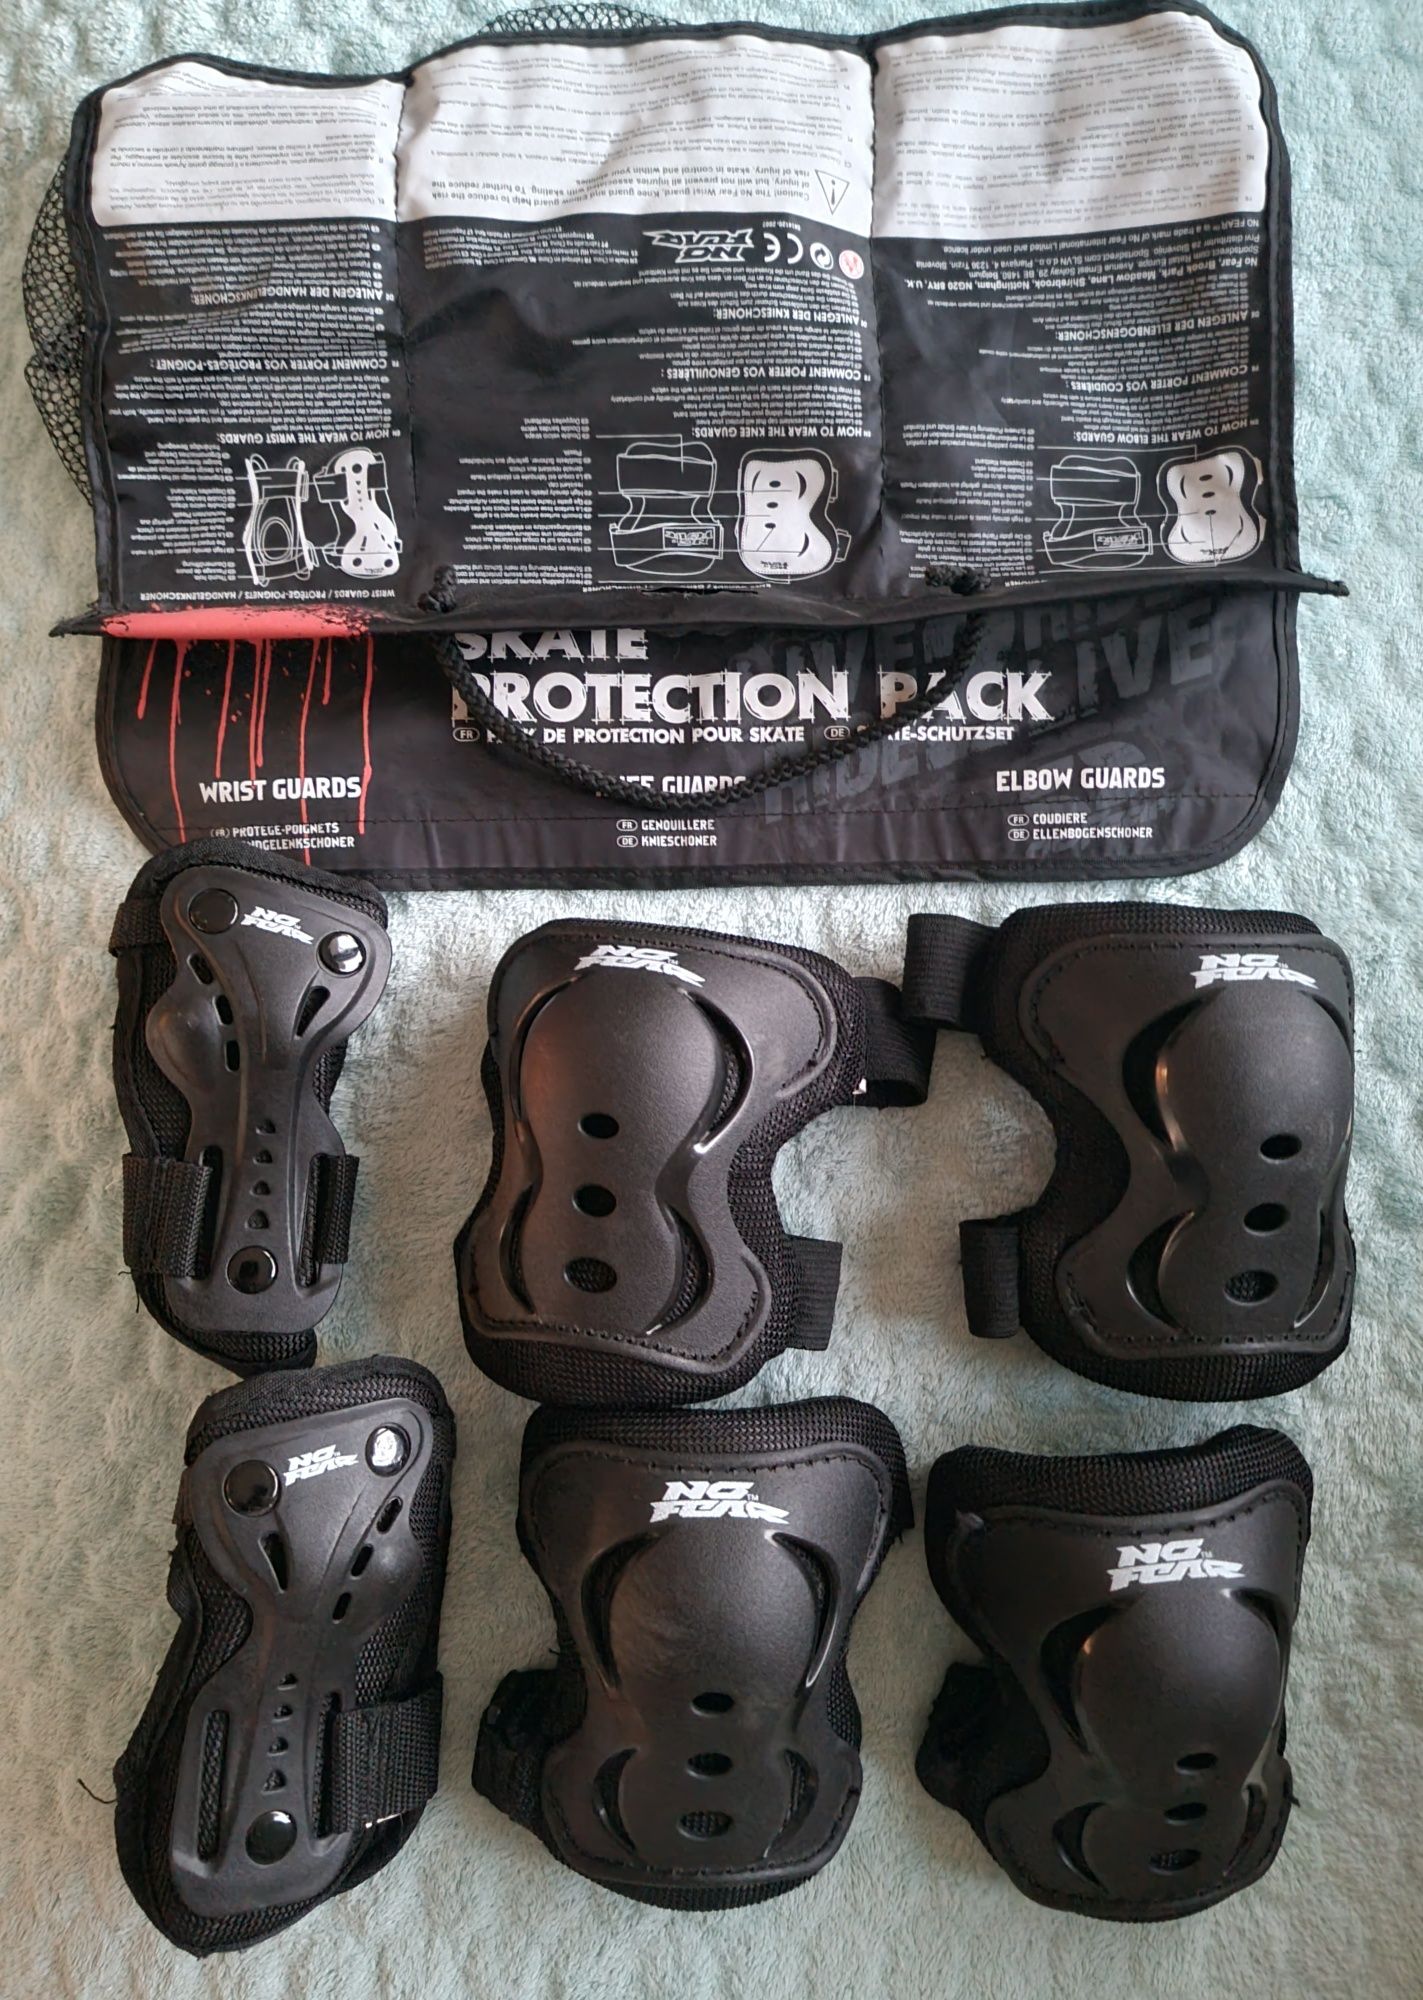 Pakiet ochraniaczy No fear Skate Protection Pack